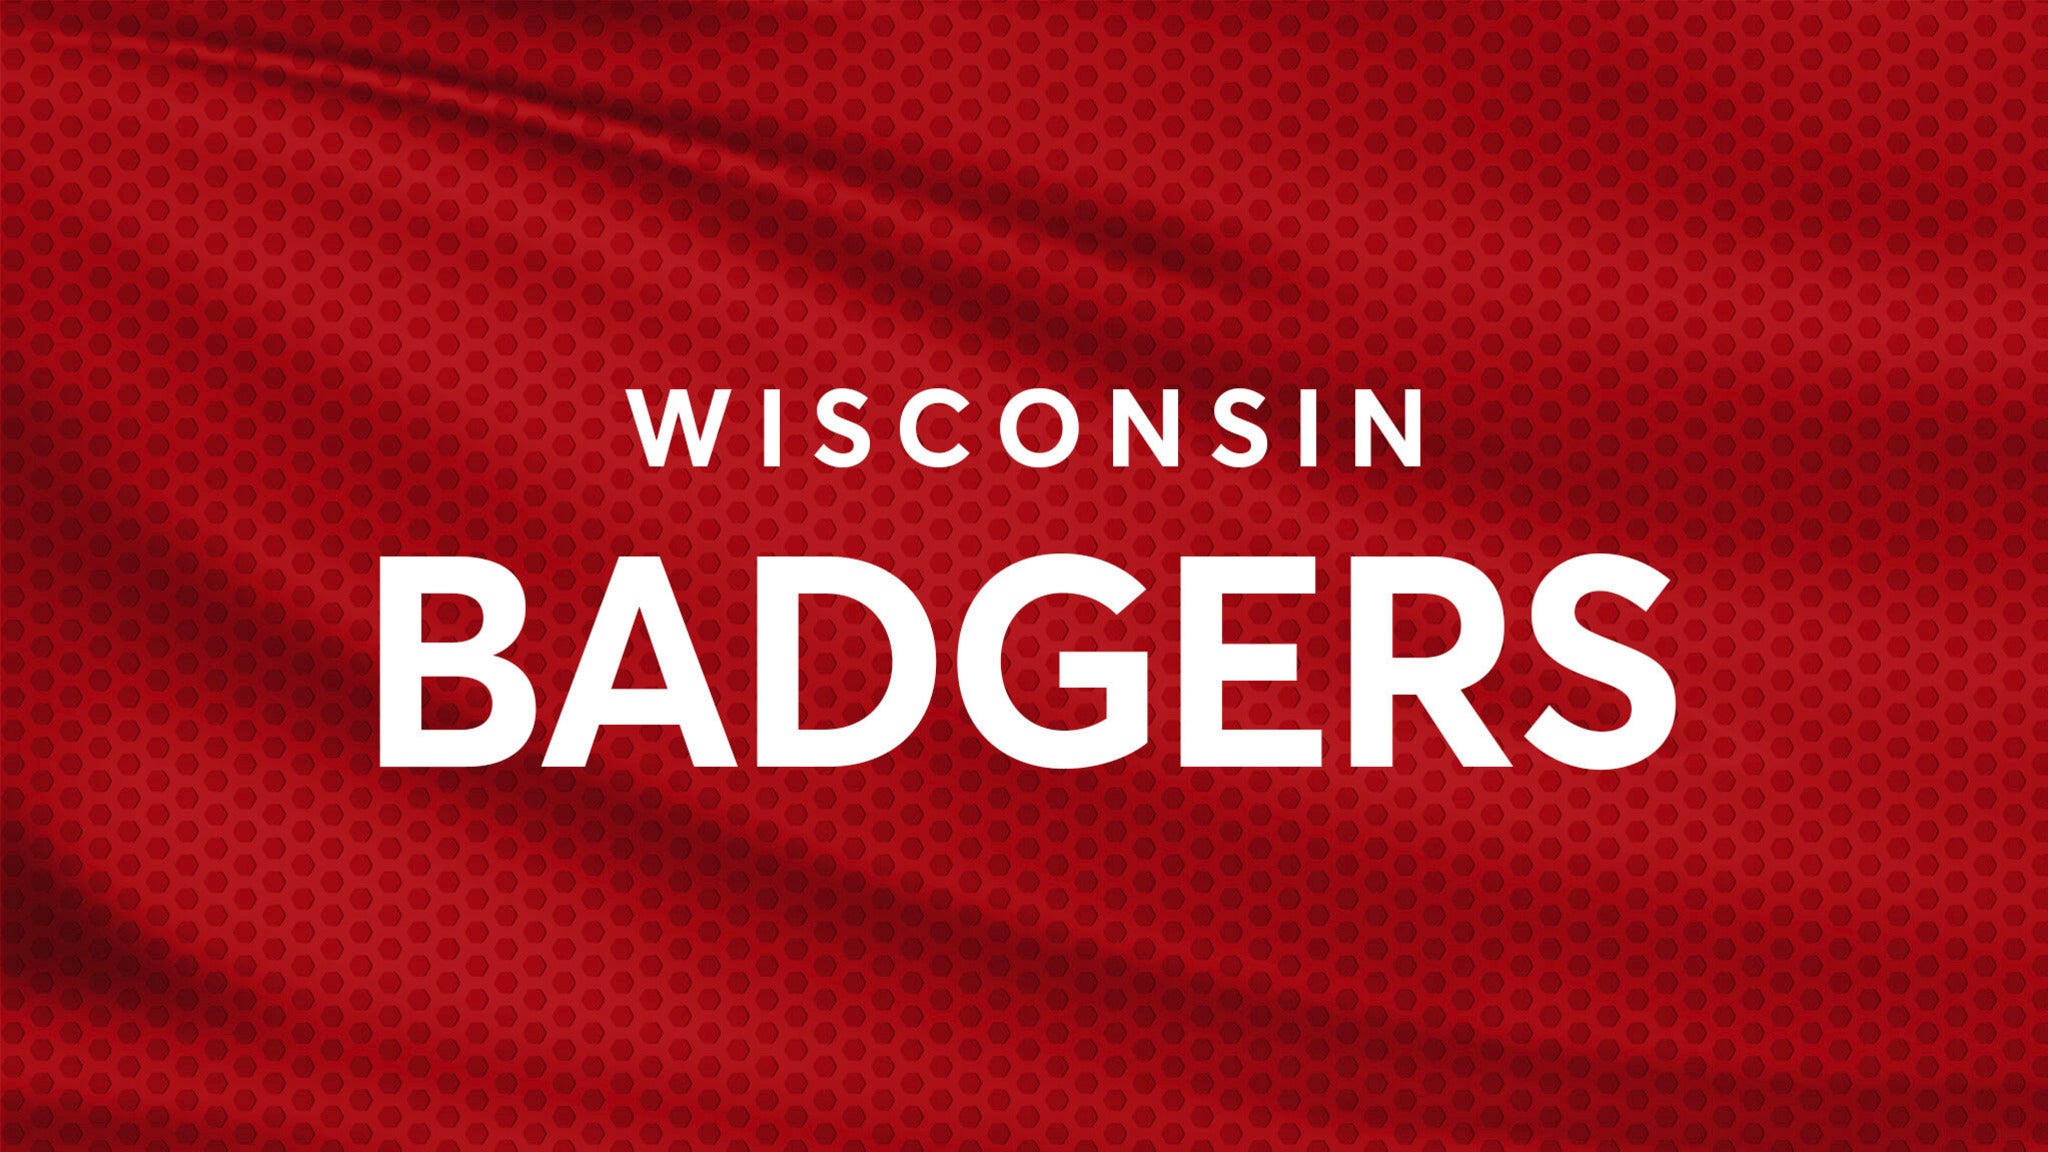 Wisconsin Badgers Hockey vs. Michigan Wolverines Hockey